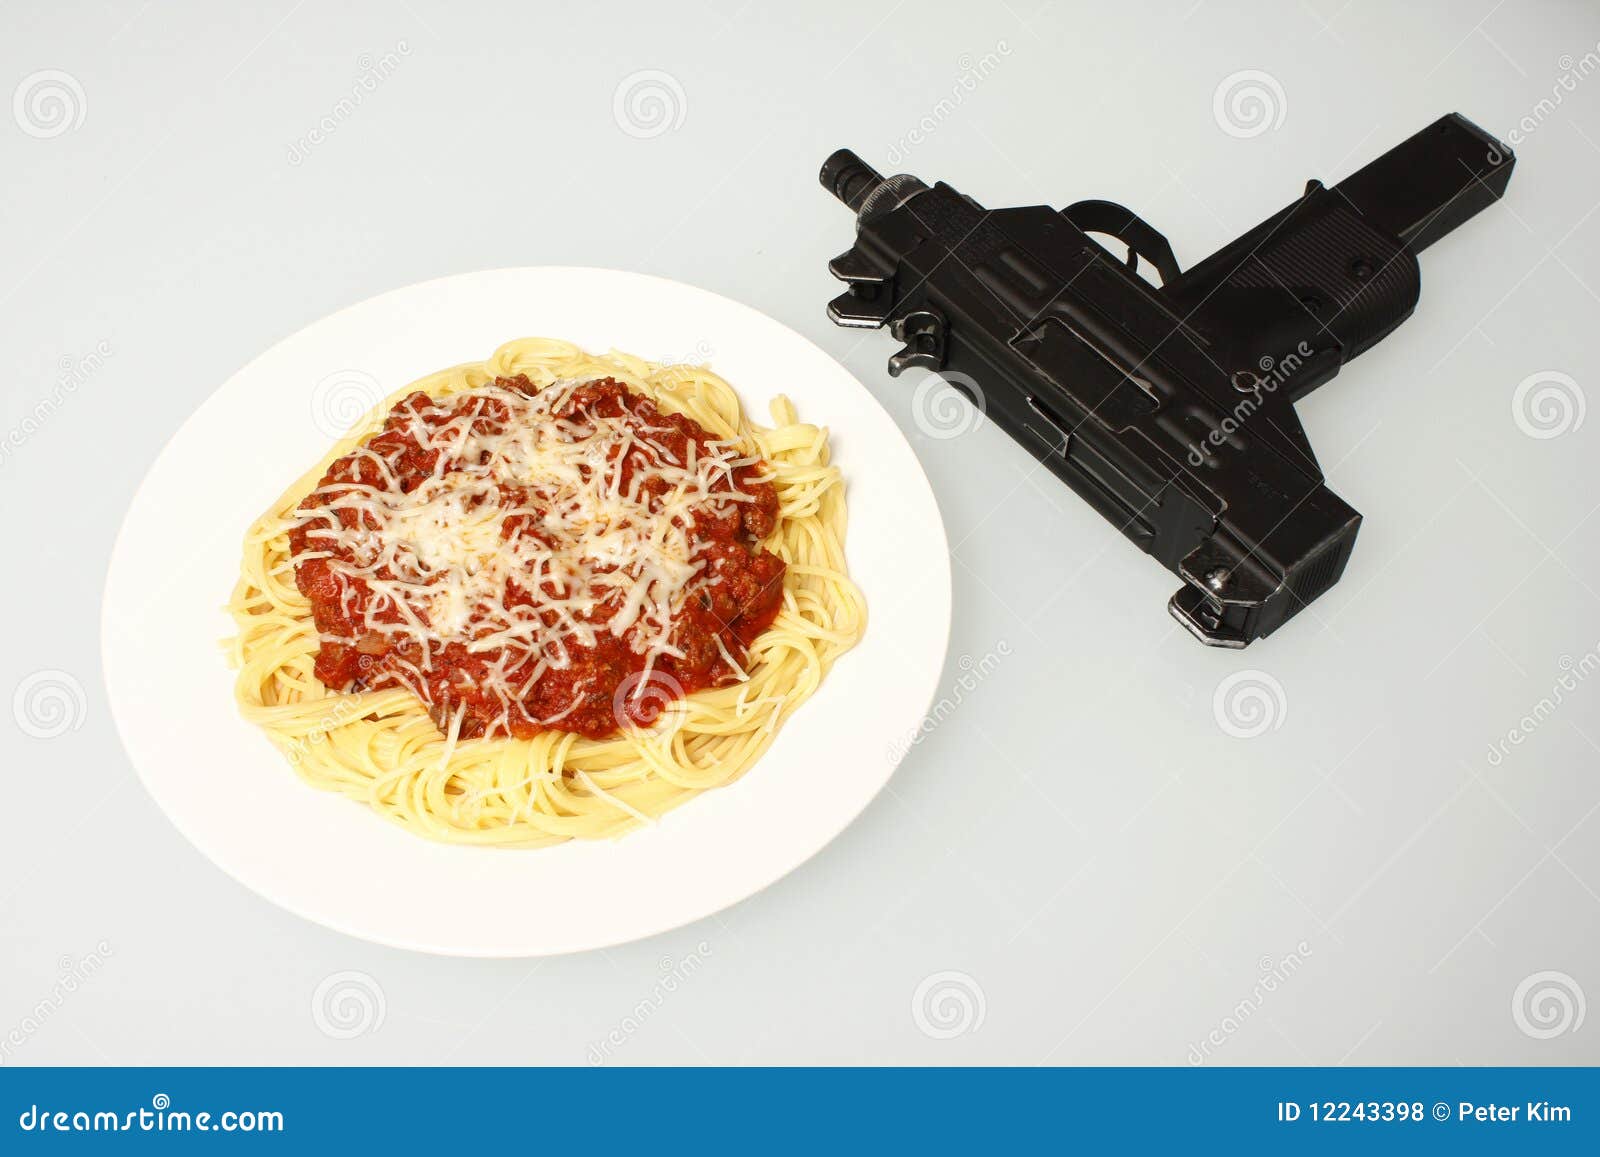 Mafia meal stock photo. Image of noodle, studio, pasta - 12243398